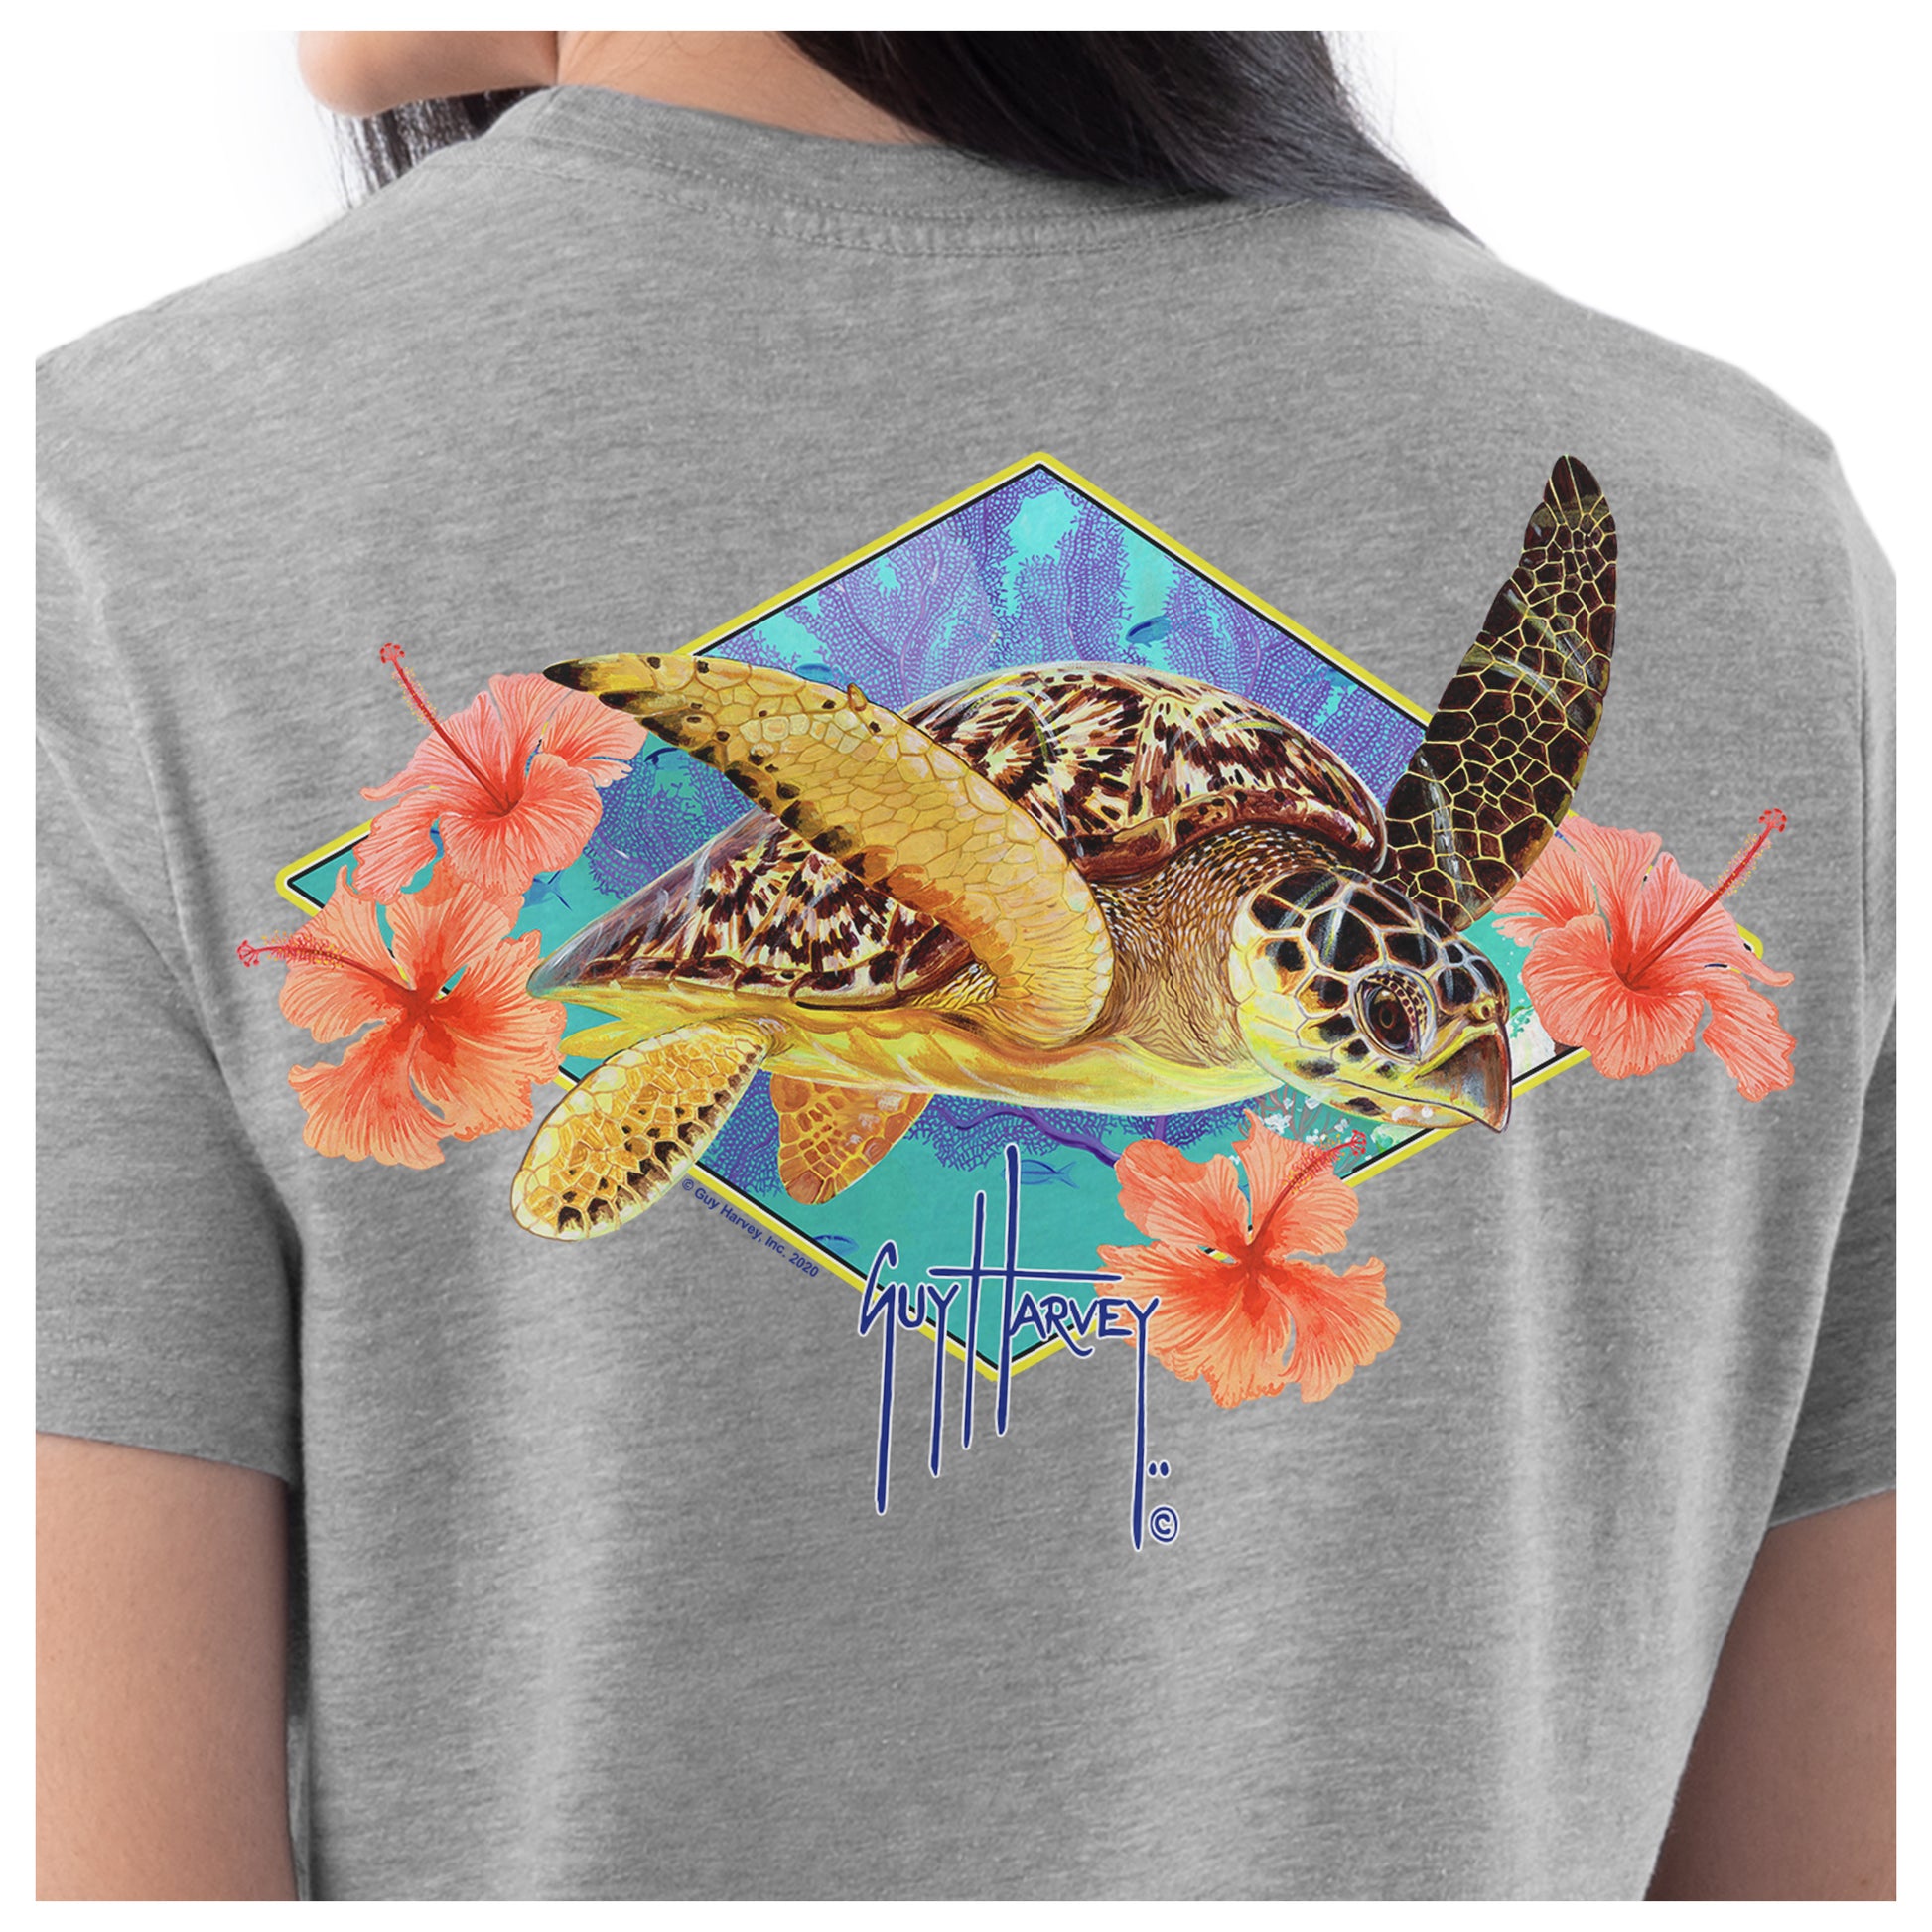 Protect The Ocean T-shirt Medium Save The Planet Sea Turtle Beach Sun